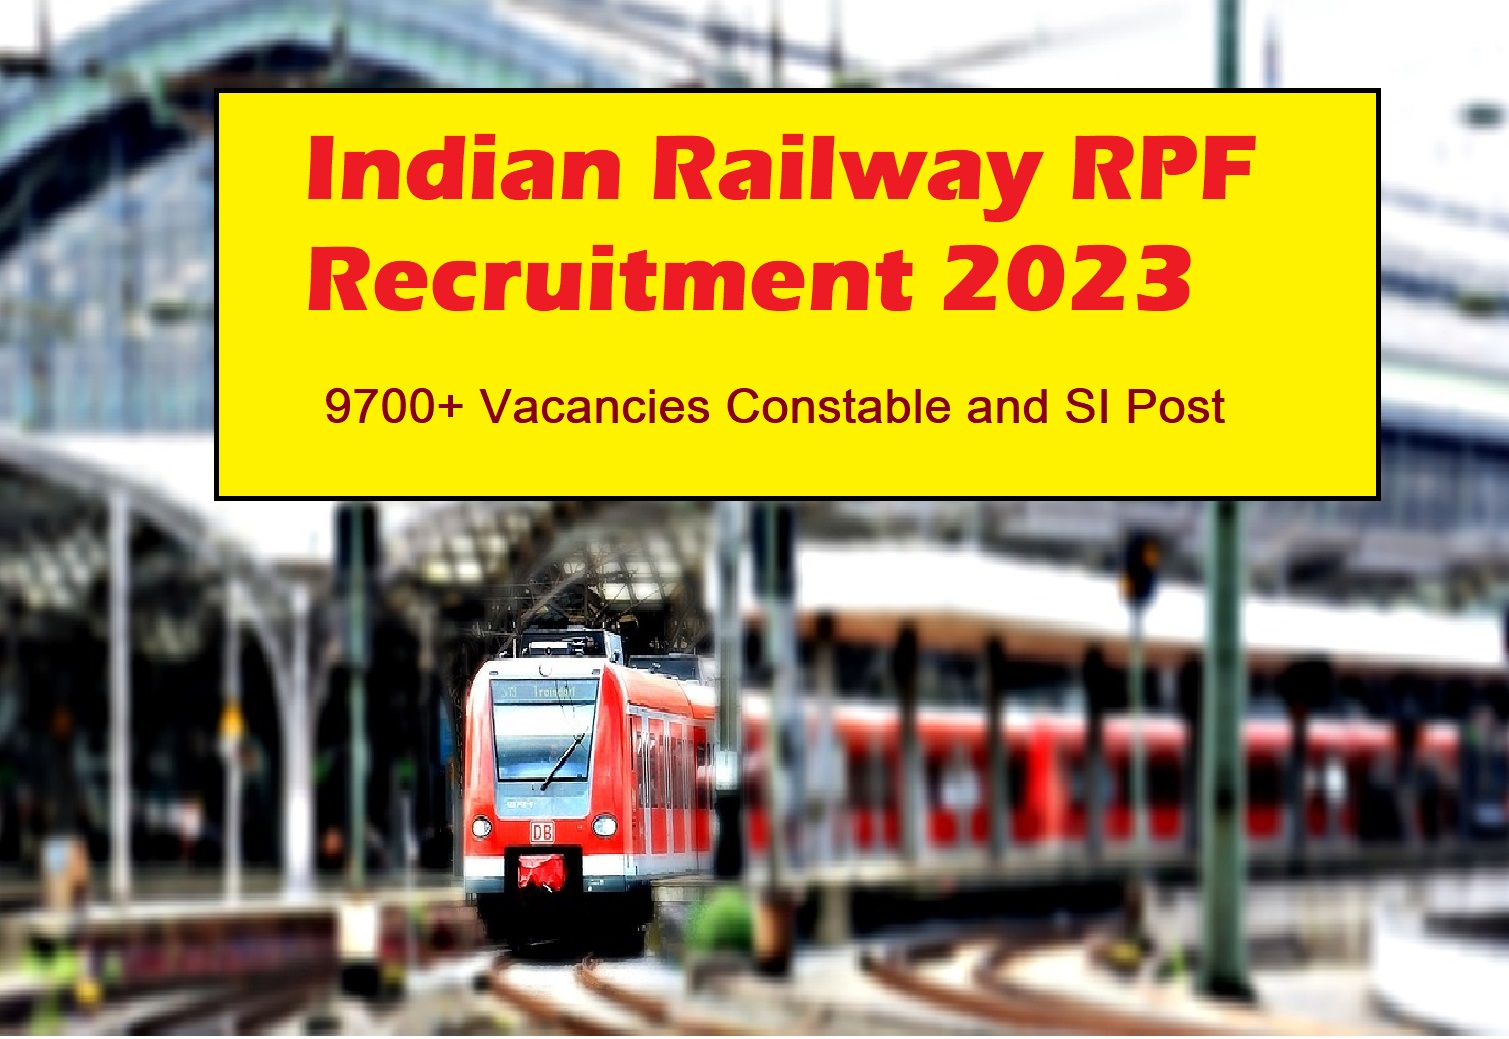 Indian Railway RPF Recruitment